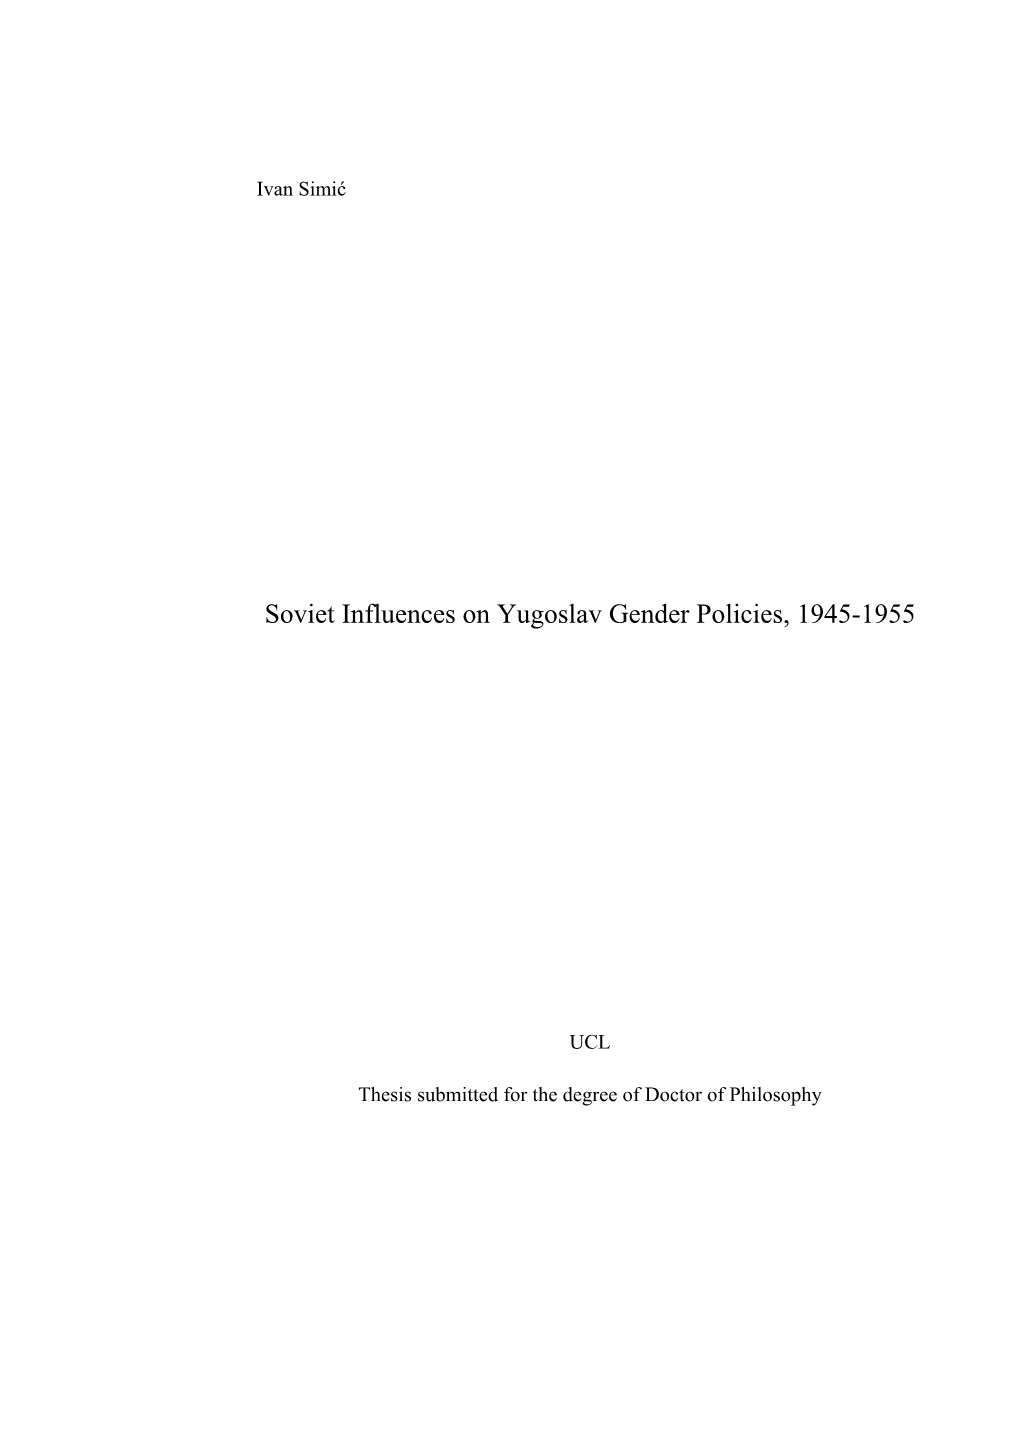 Soviet Influences on Yugoslav Gender Policies, 1945-1955